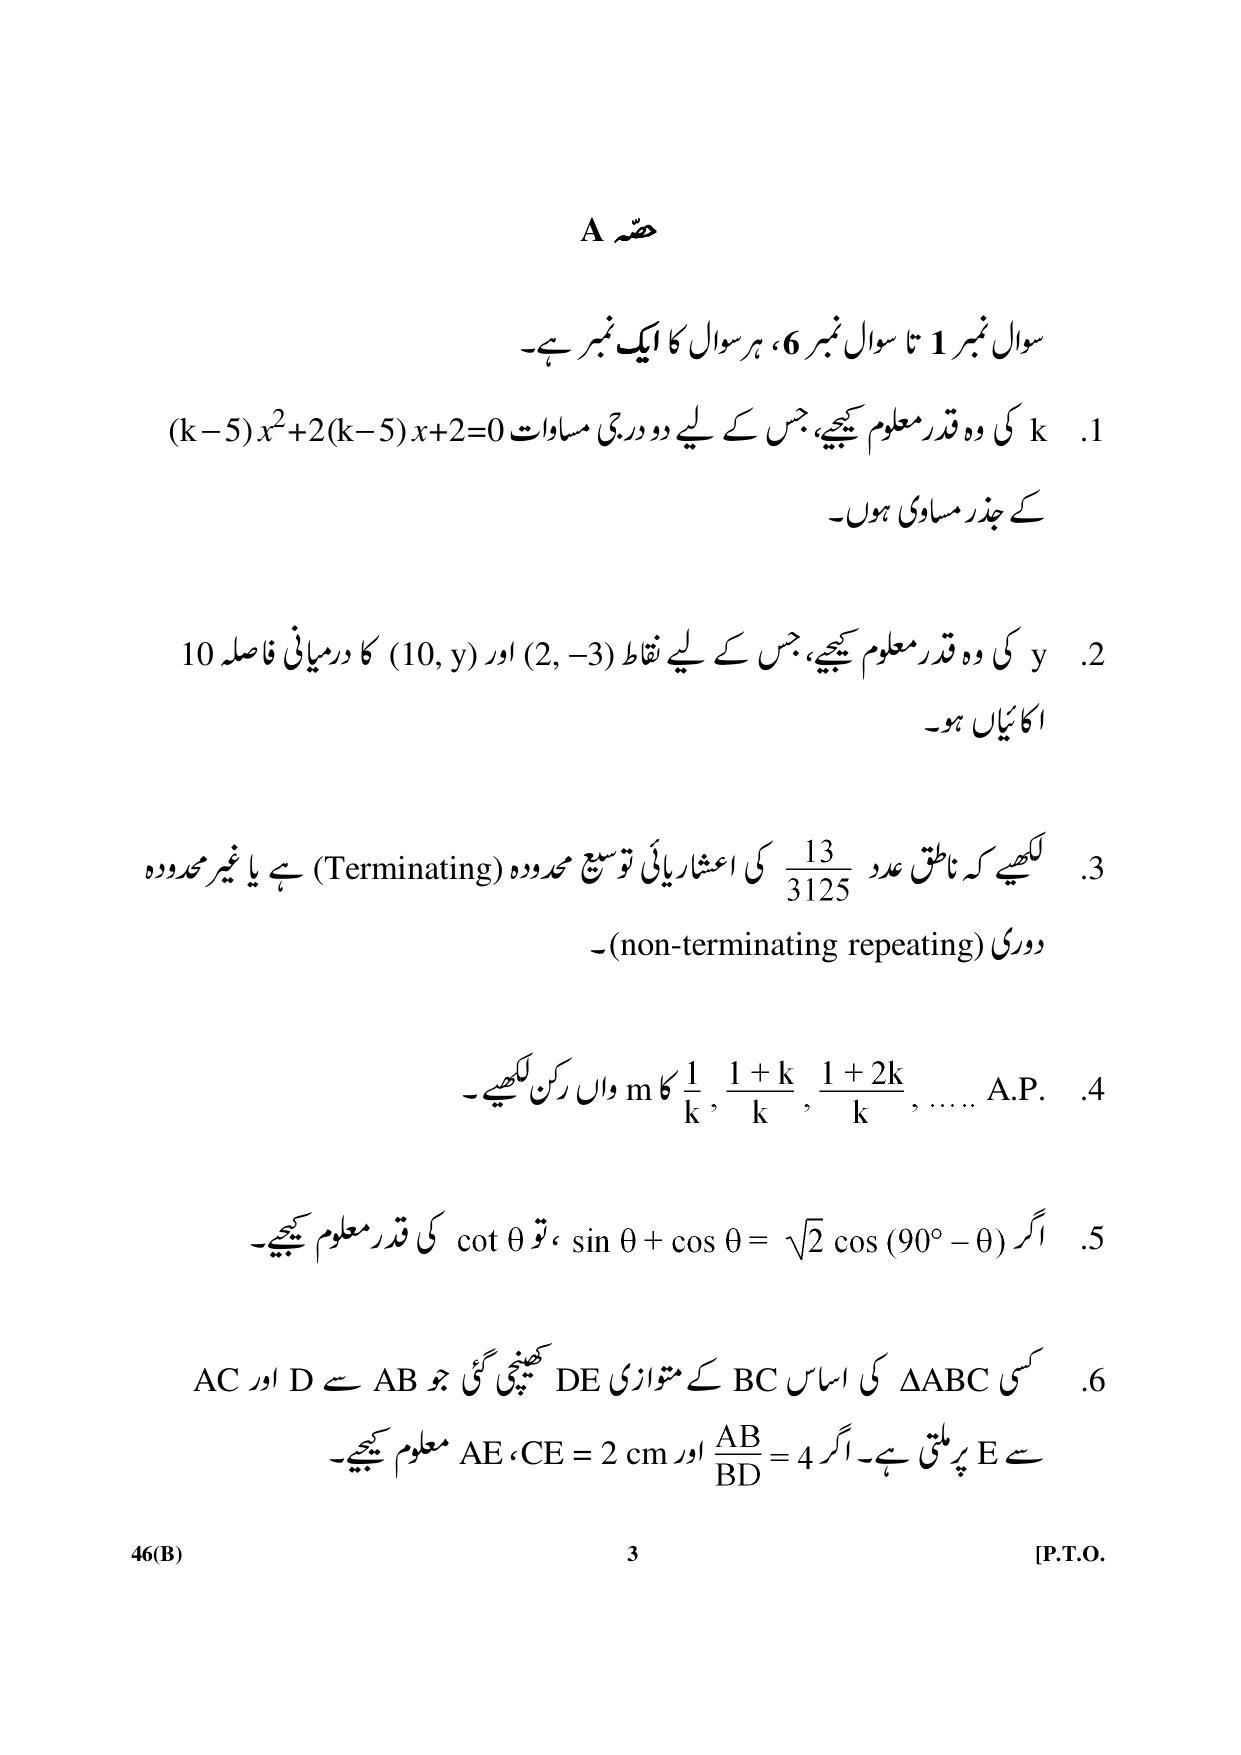 CBSE Class 10 46(B) Maths (For Blind) Urdu Version 2018 Question Paper - Page 3